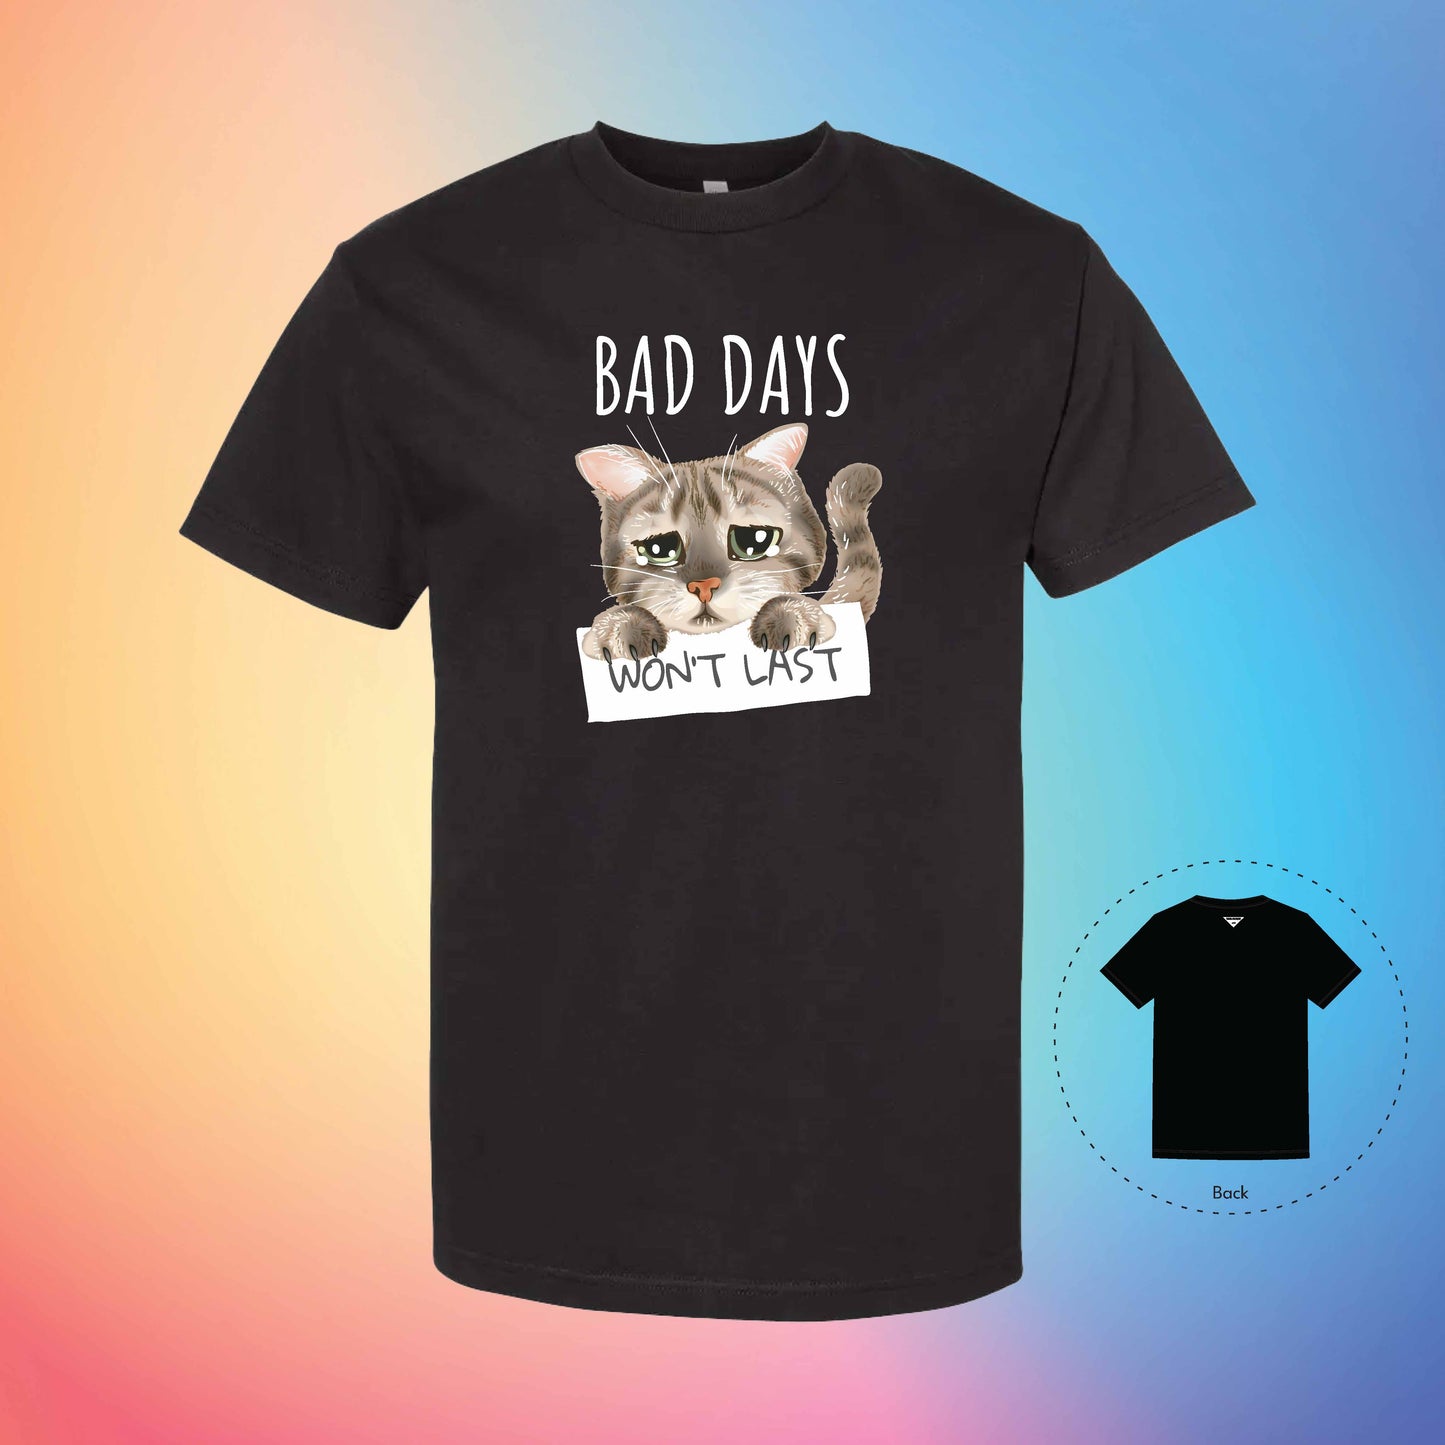 BAD DAYS | Meow T-Shirt (Black)